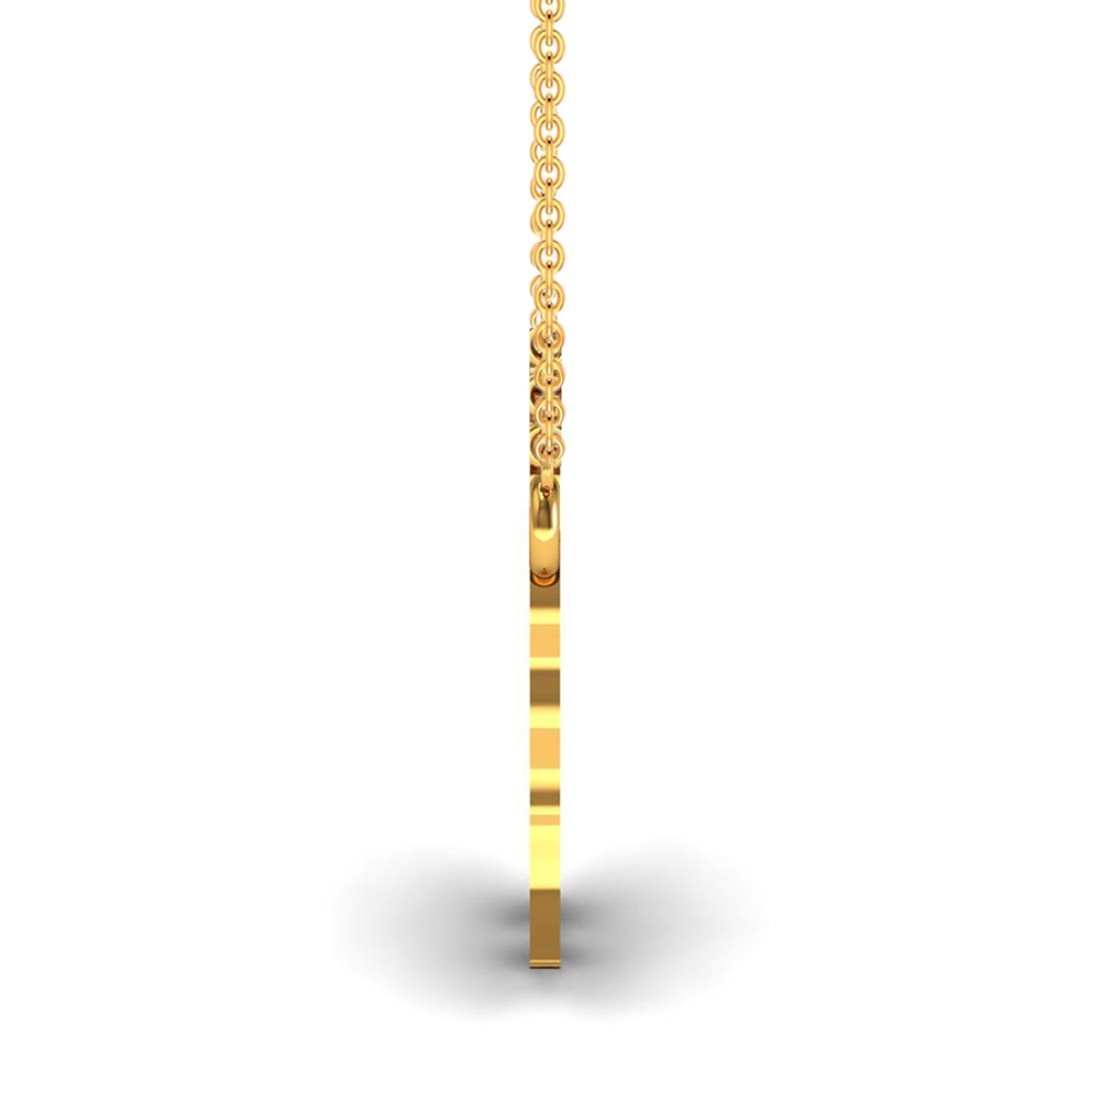 Giraffe shape gold pendant, 18k gold kids jewelry